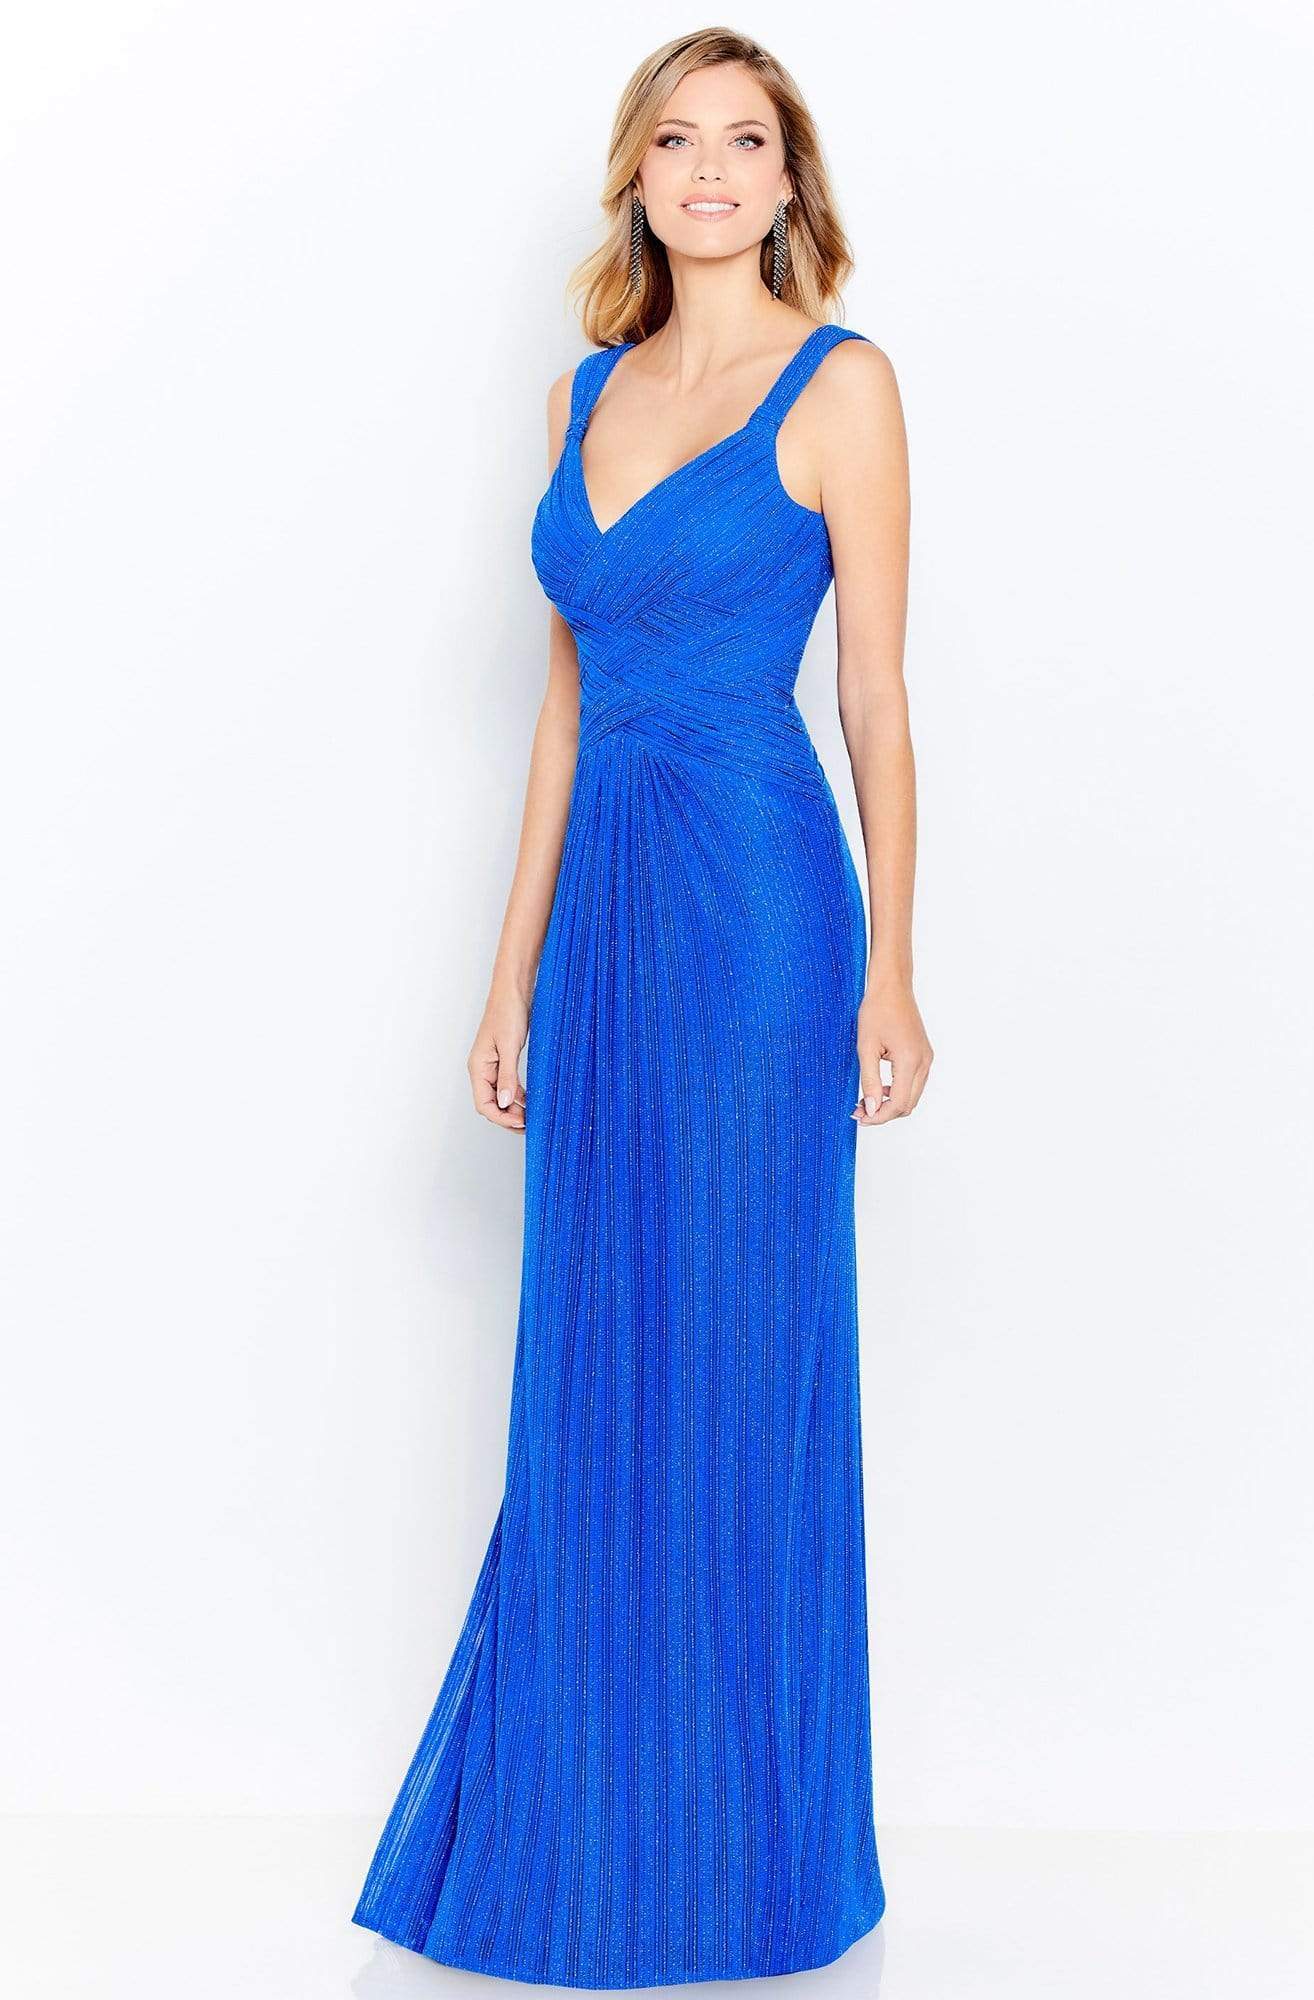 Cameron Blake by Mon Cheri - 120605 V-Neck Sheath Evening Dress Evening Dresses 4 / Royal Blue